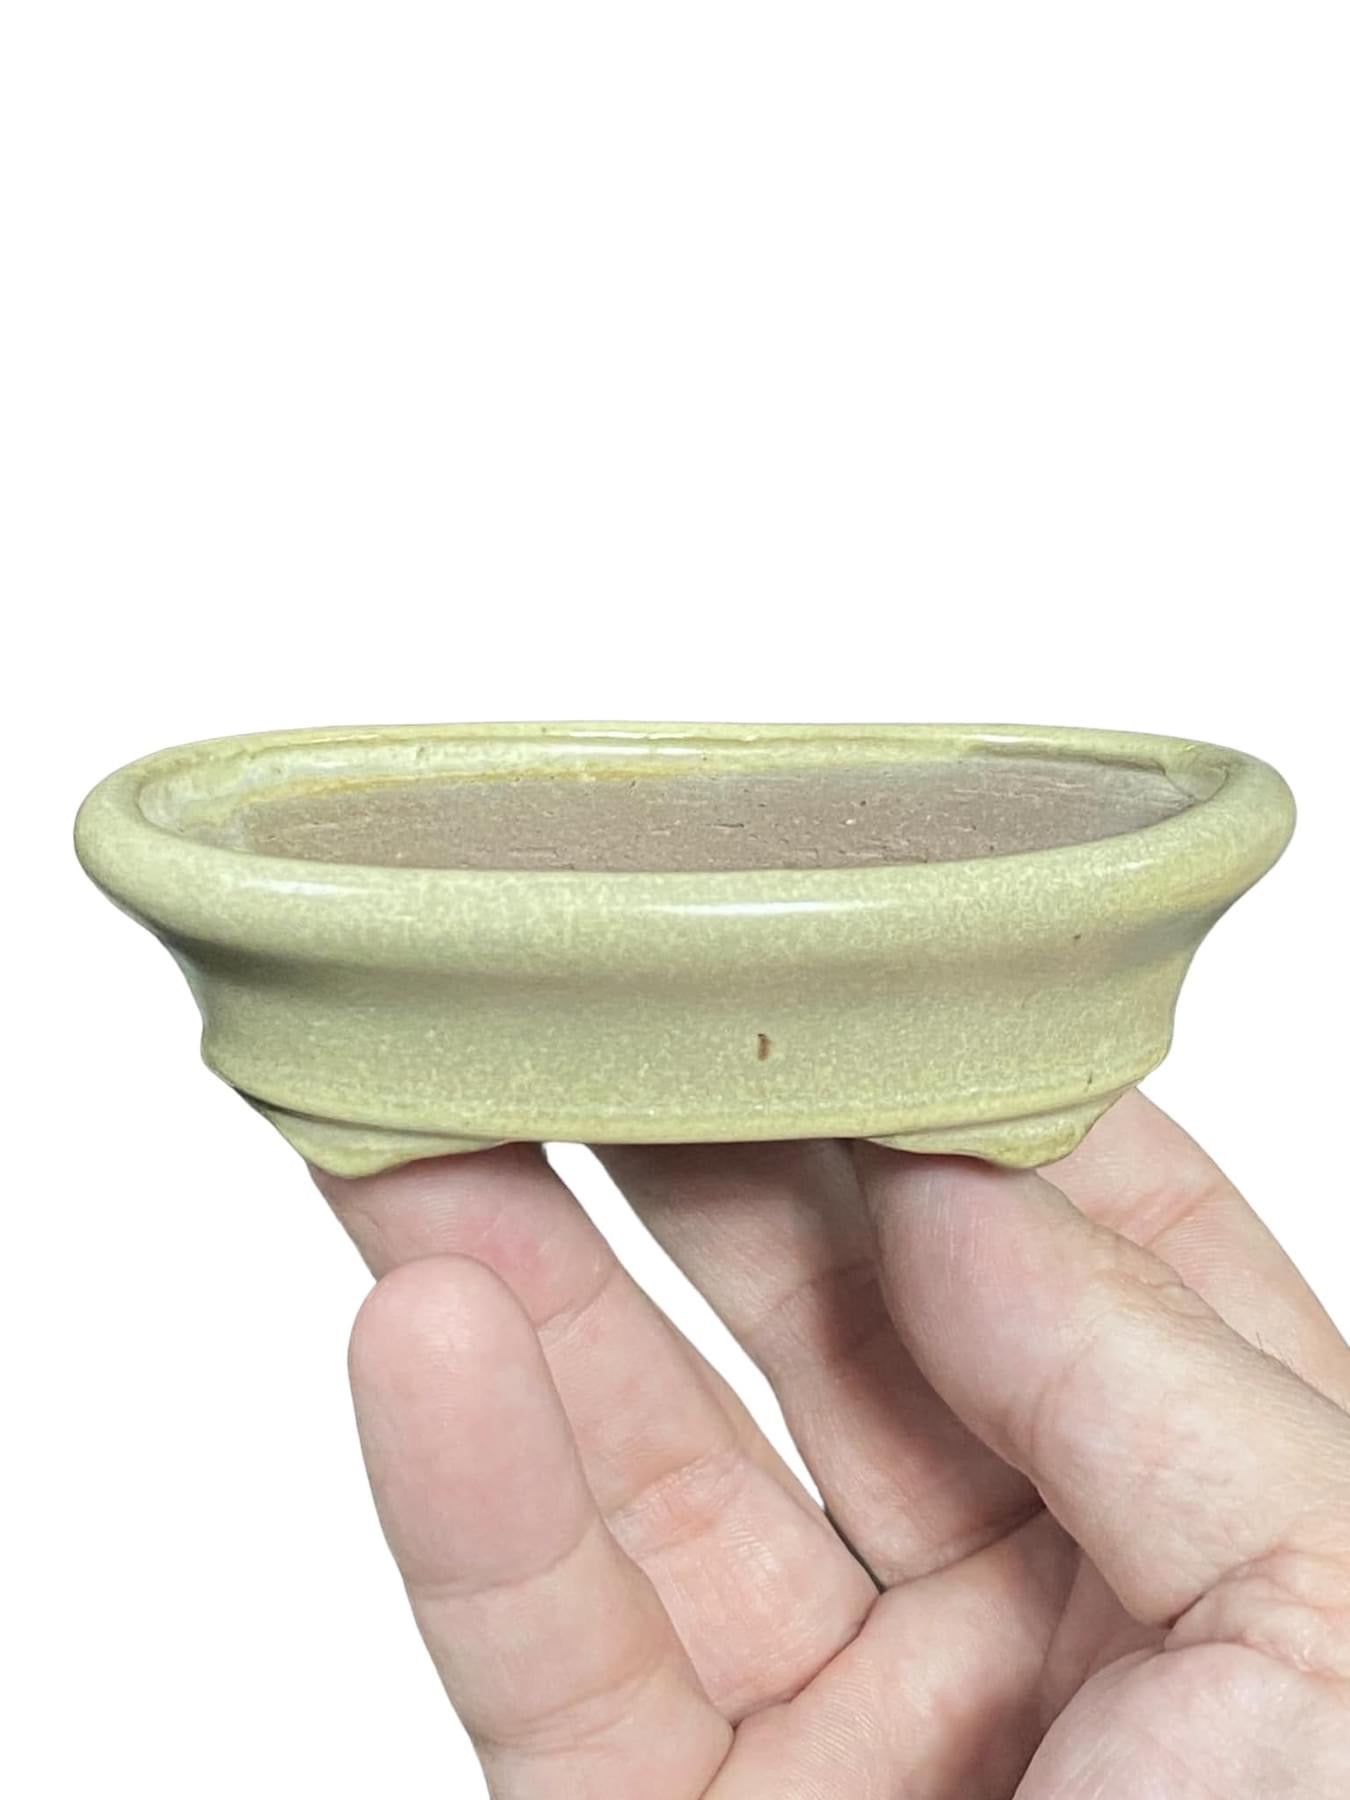 Shibakatsu - Cream Glazed Oval Style Bonsai Pot